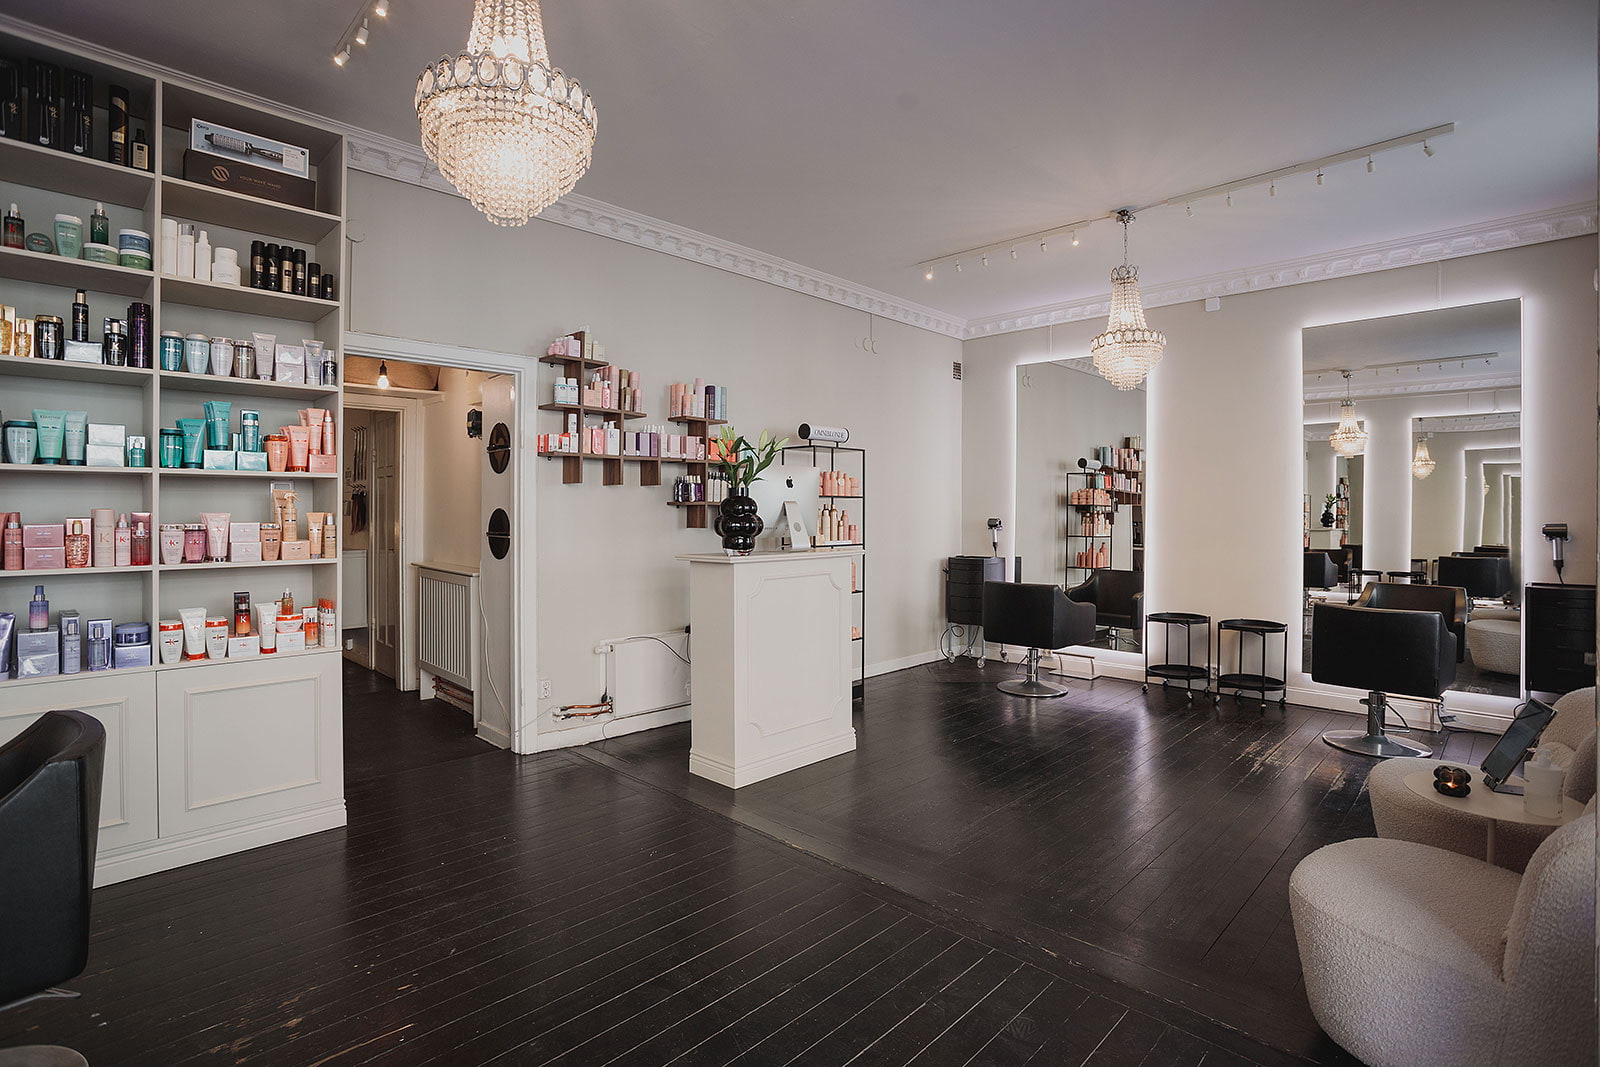 Salong Upplandsgatan60 by Mikkan – Hairdressers